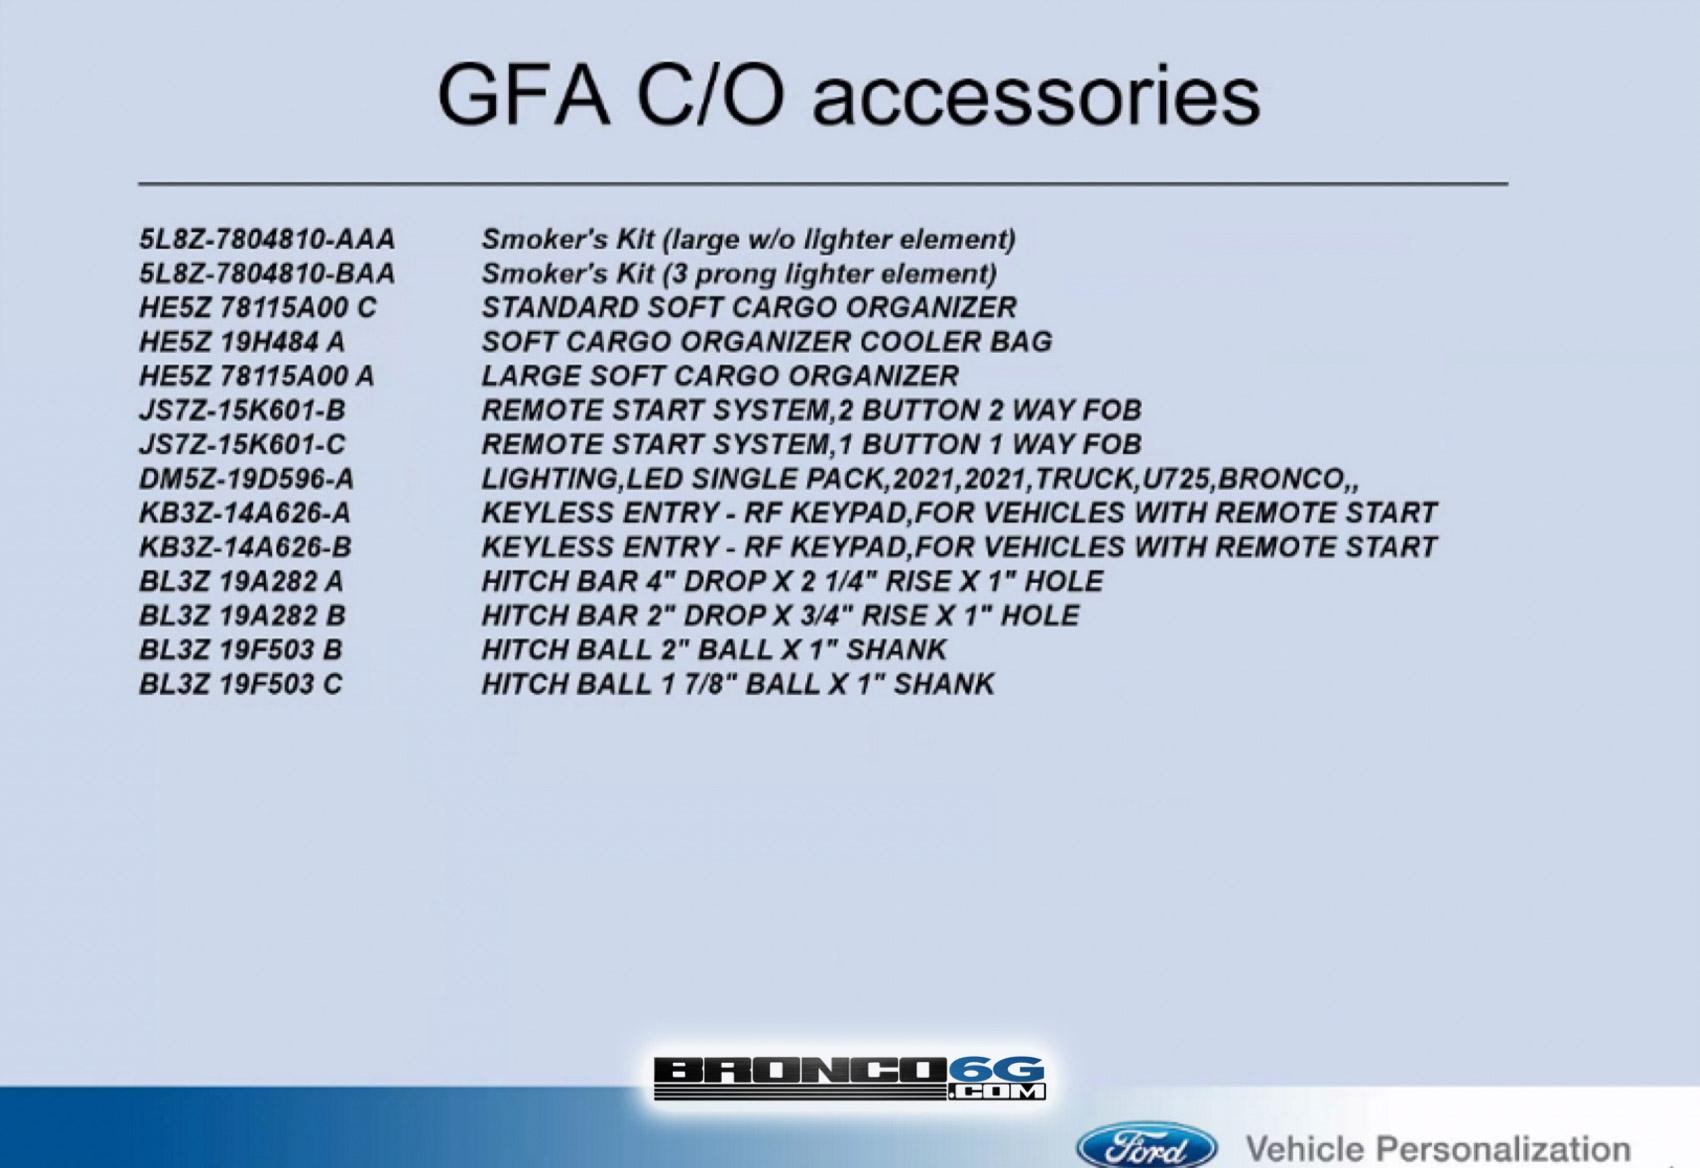 2021 Bronco Accessories List 2.jpg